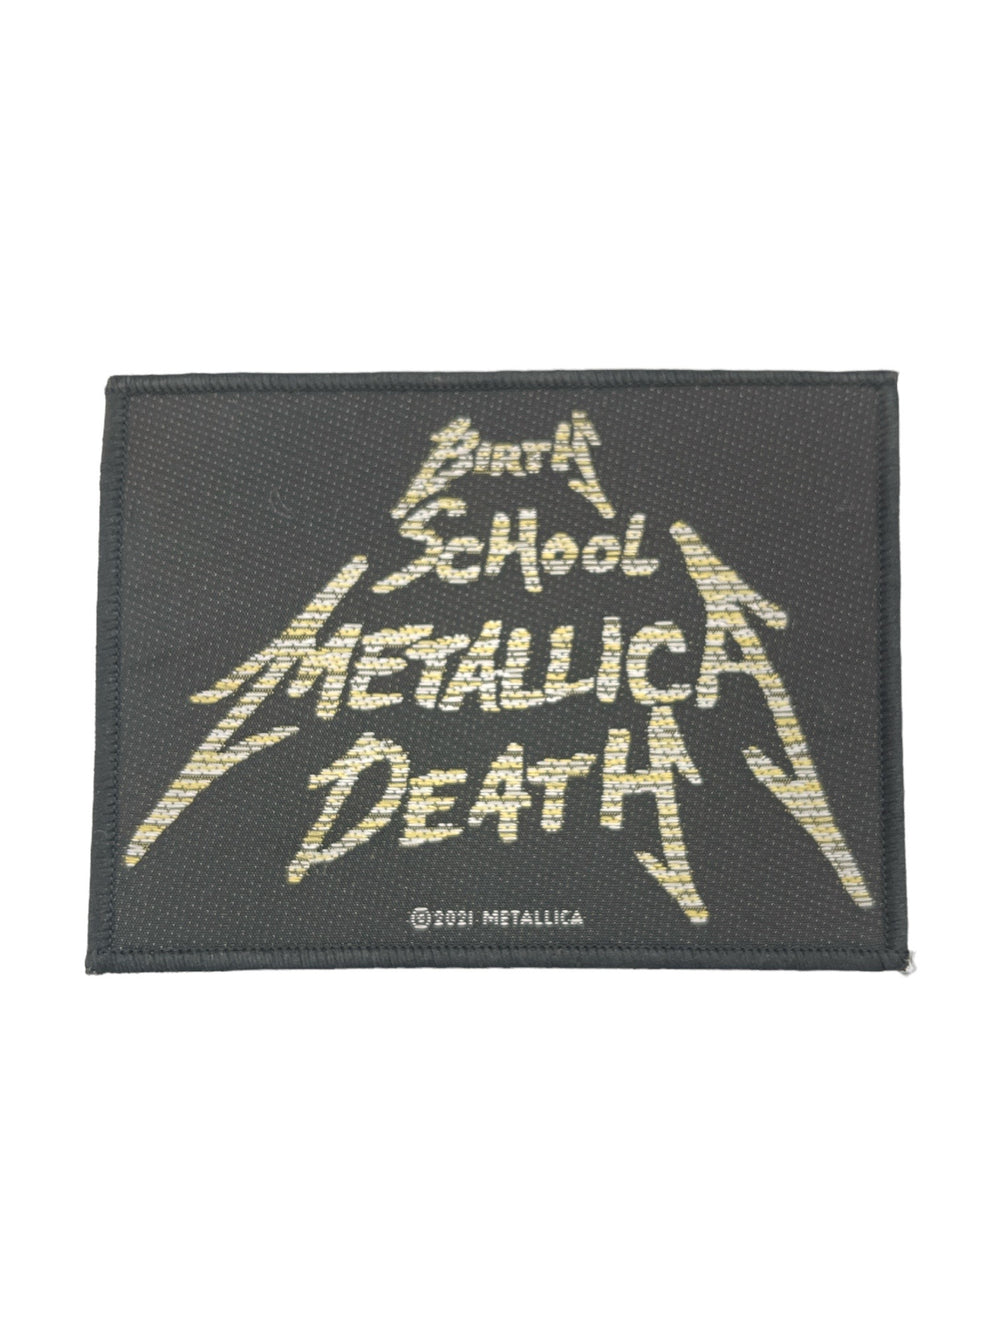 Metallica Standard Patch: Birth, School, Metallica, Death Official Woven Patch Brand New